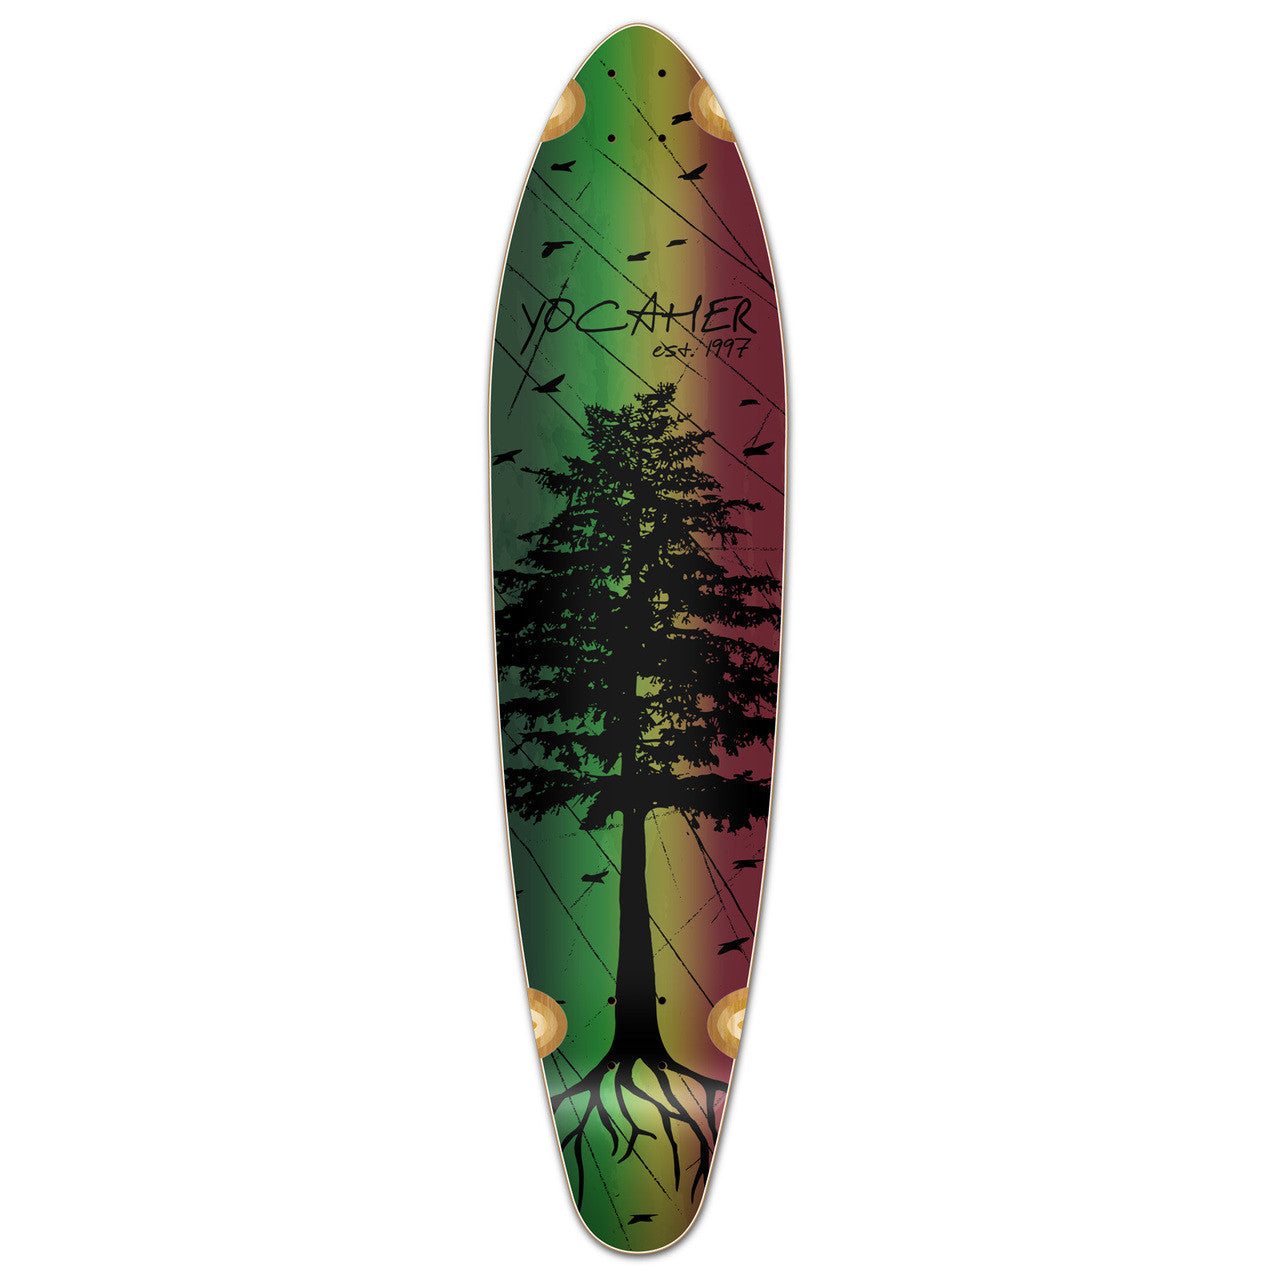 Yocaher Kicktail Longboard Deck - In the Pines Rasta